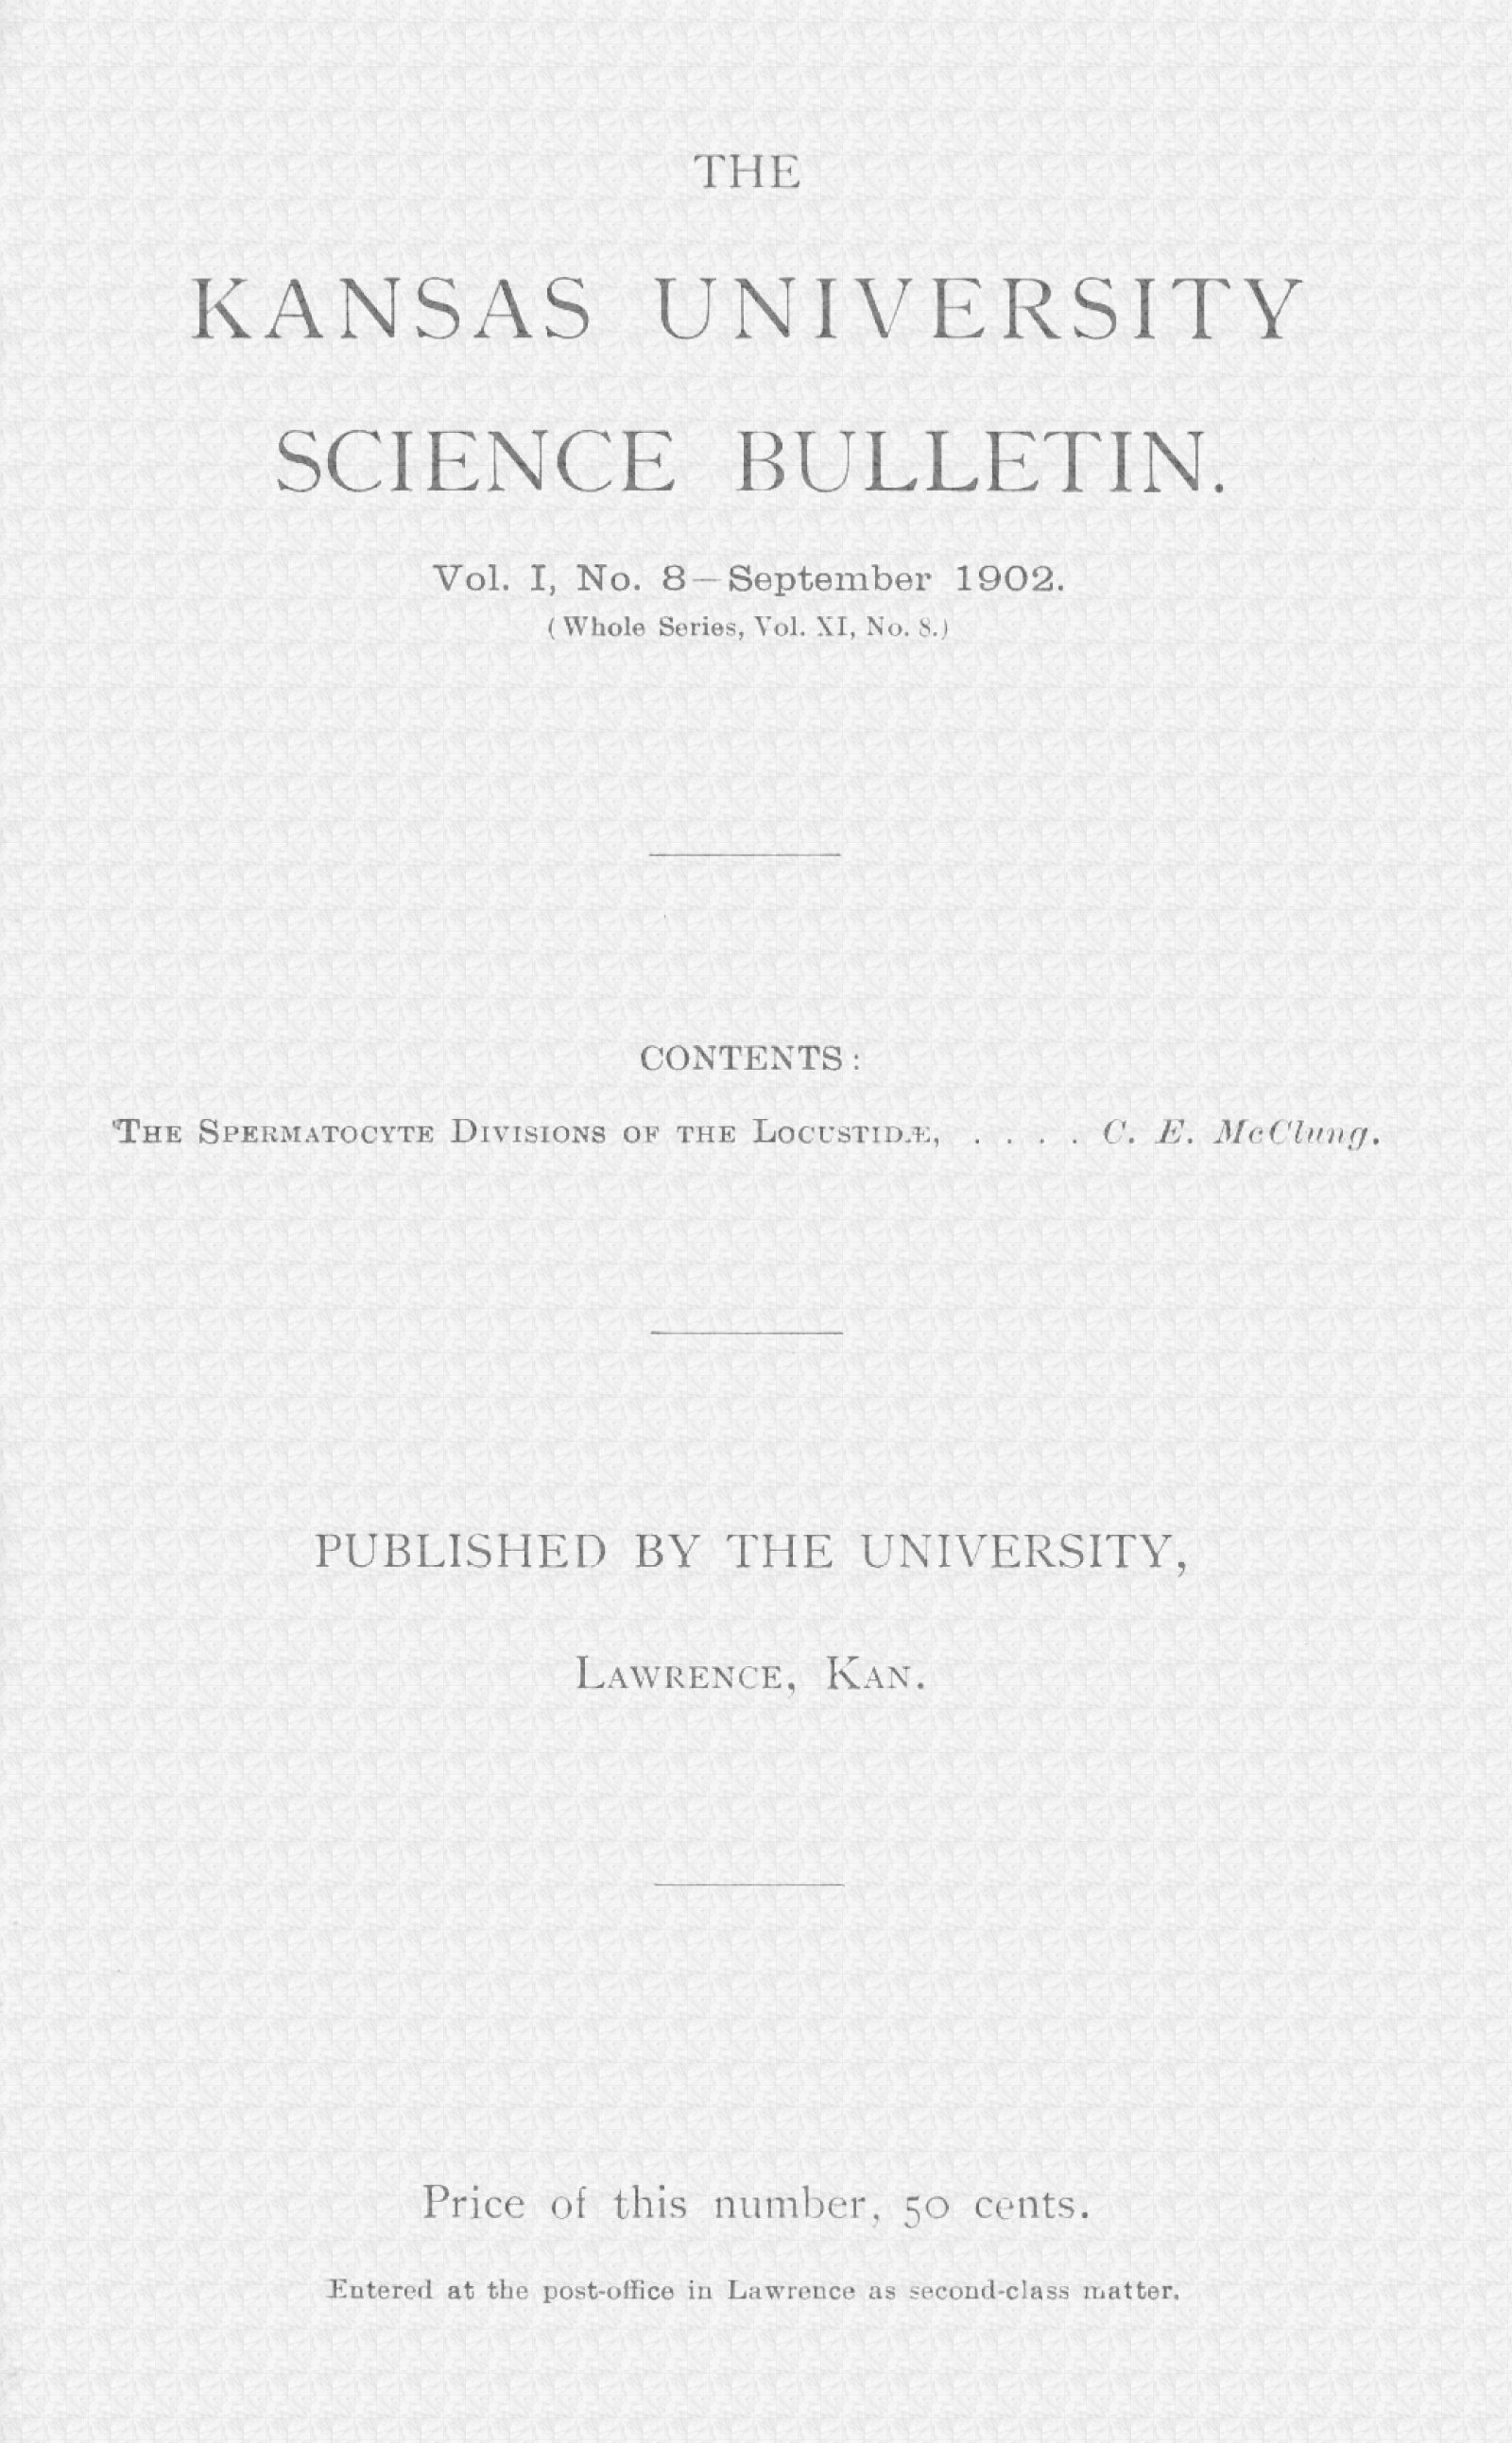 The Kansas University science bulletin, Vol. I, No. 8, September 1902